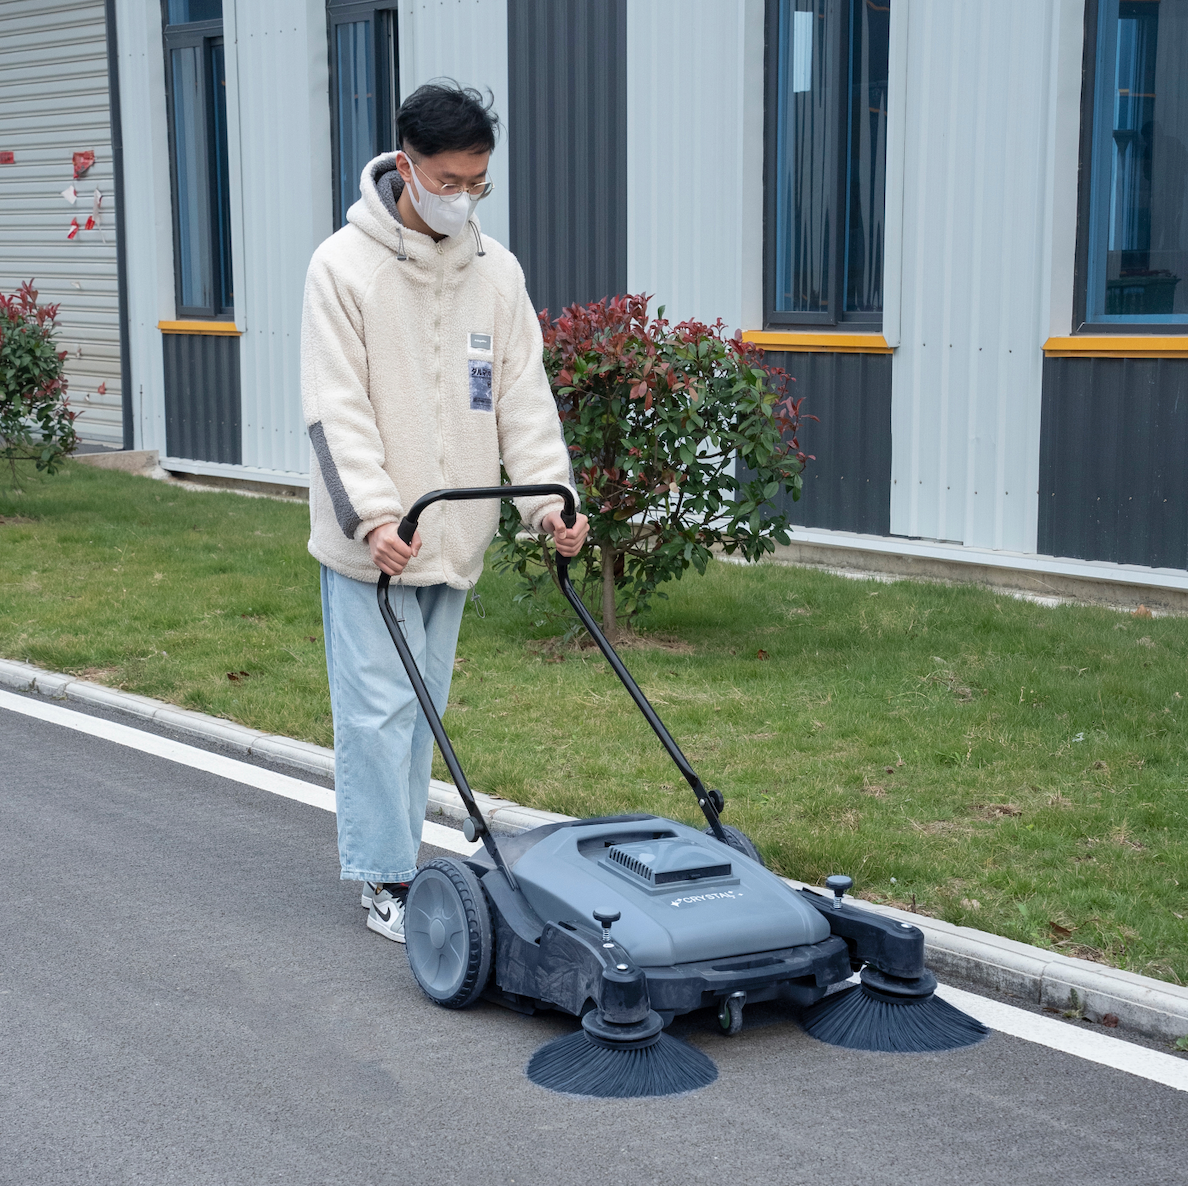 Industrial Floor Sweeper with 3 Brooms, 39 inch 14.5 Gal Floor Sweeper, BC39S